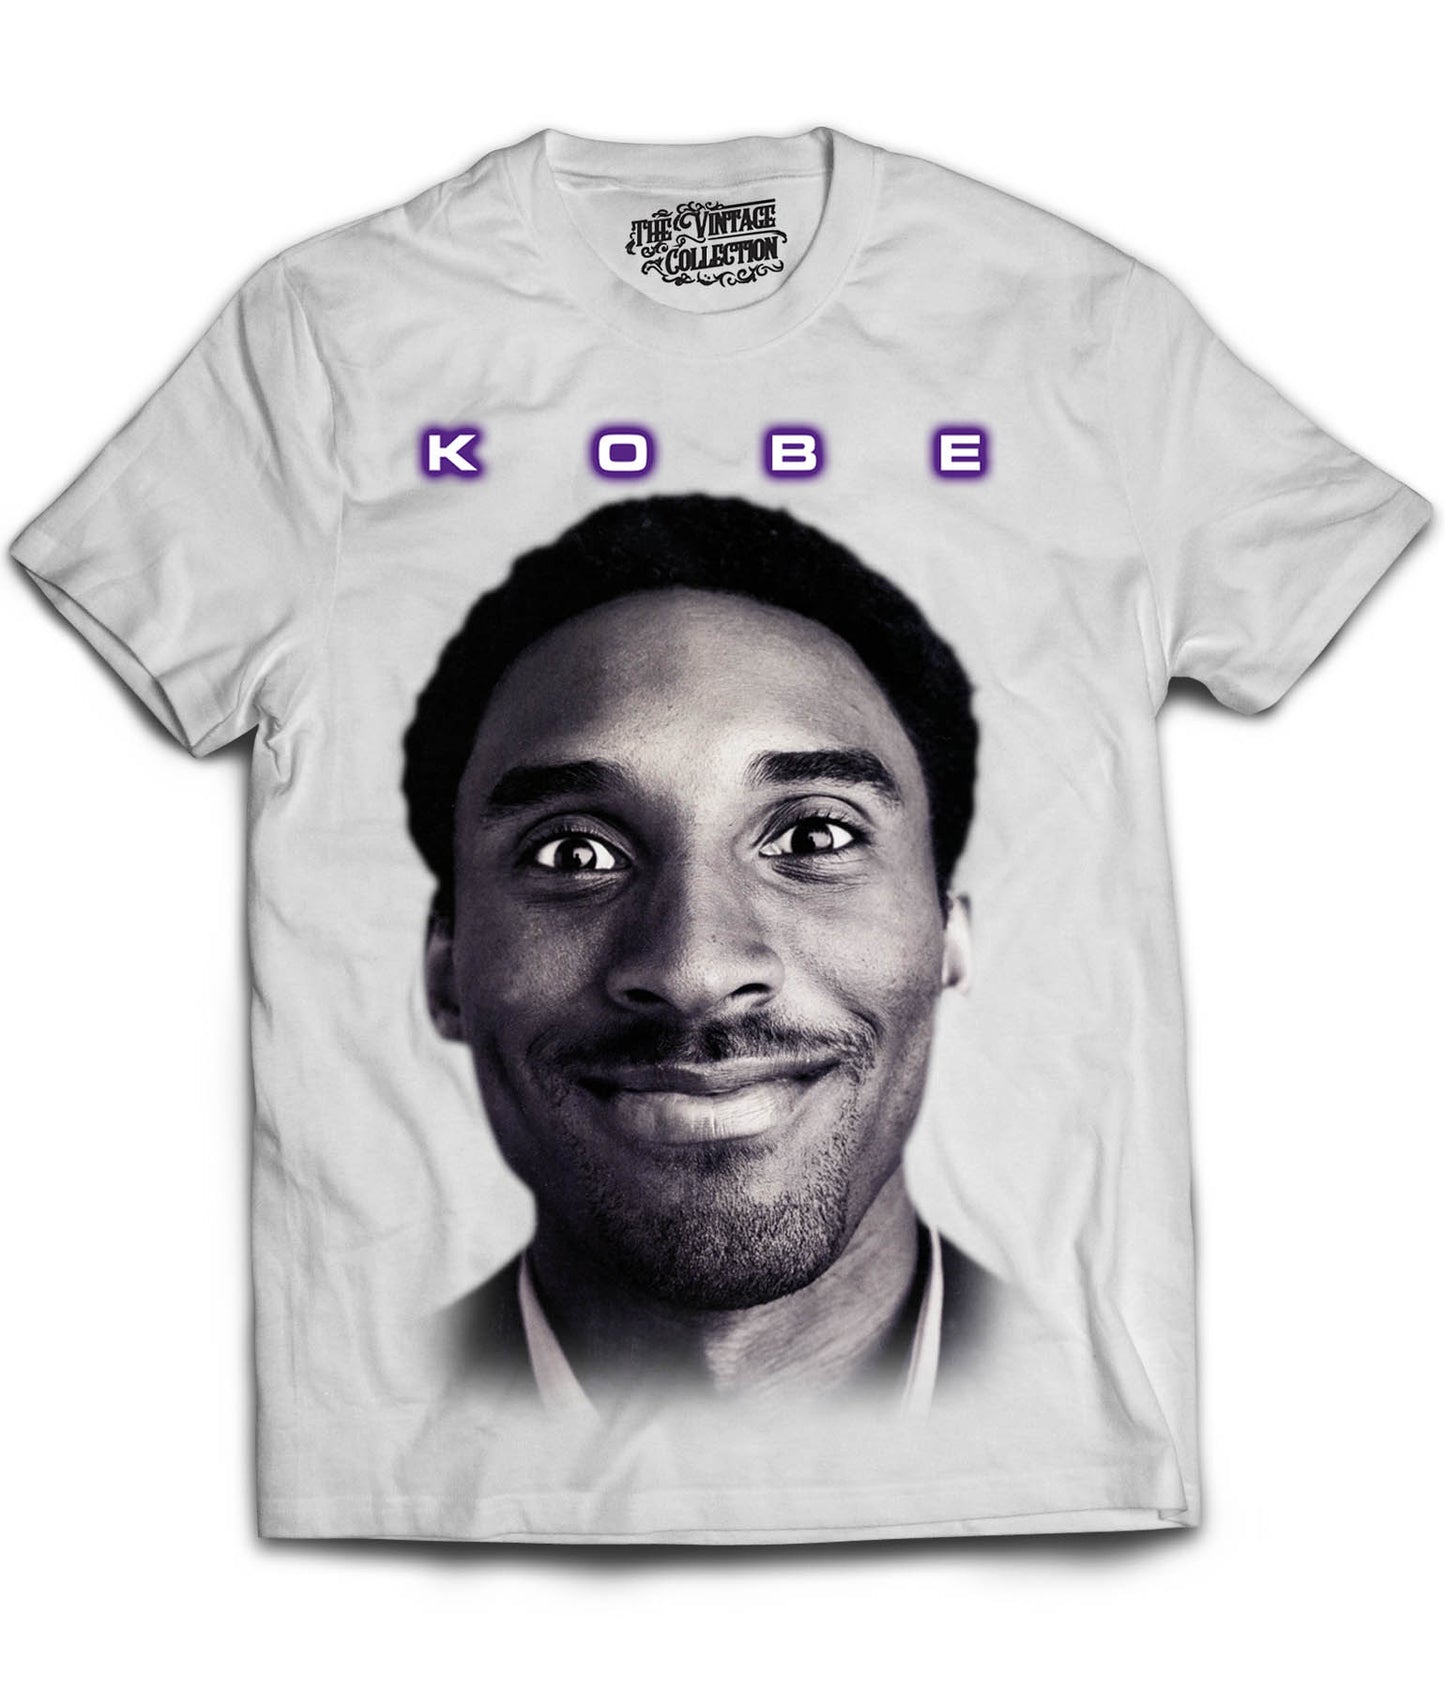 Kobe Tribute Shirt (White)